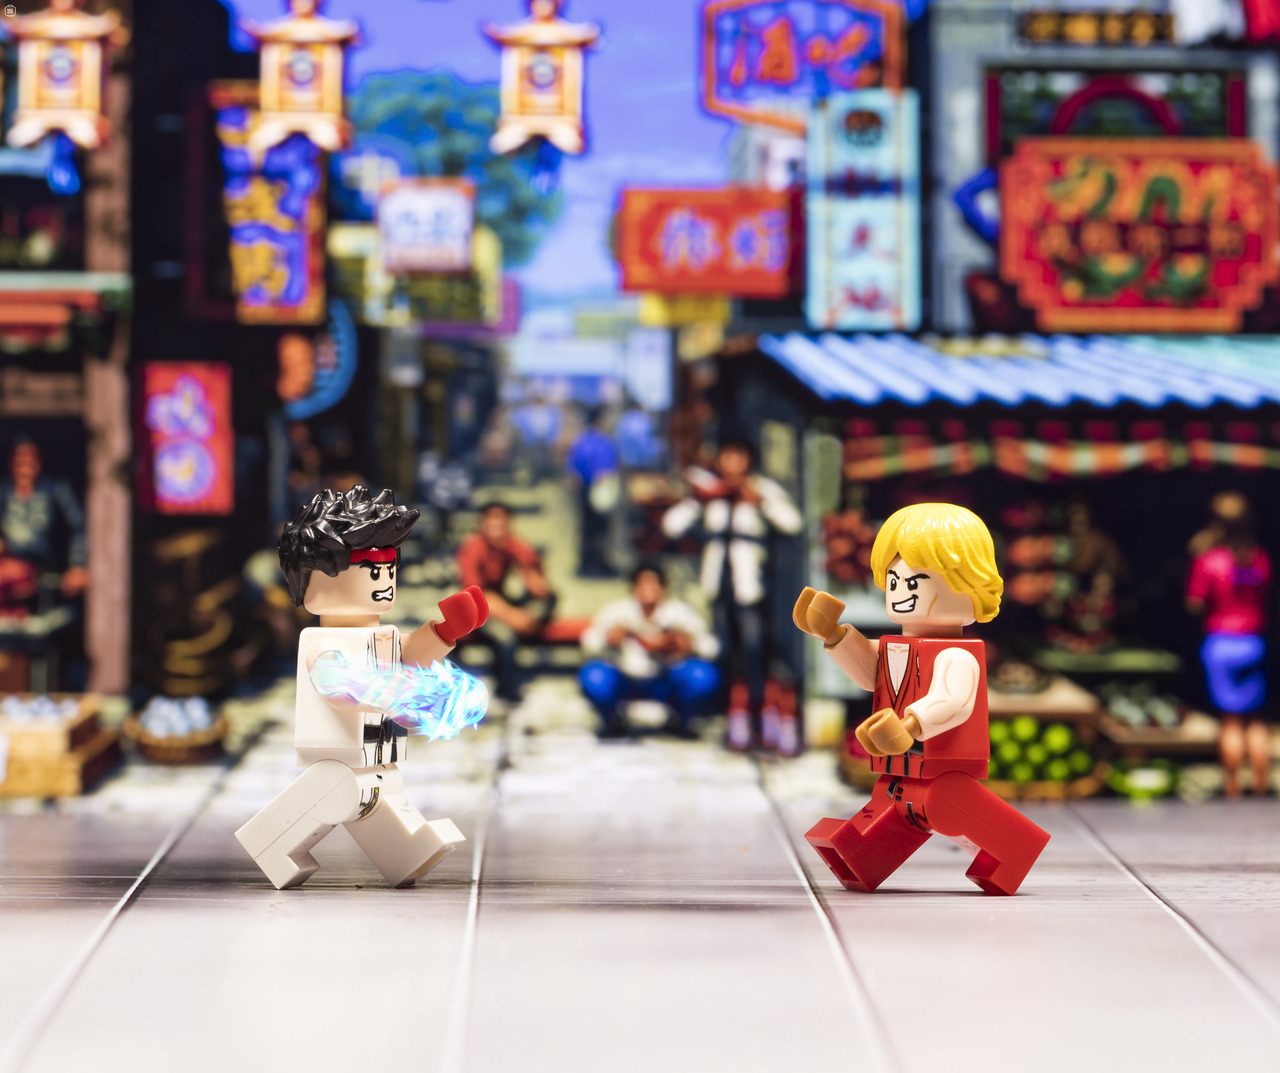 Ryu vs. Ken (Lego Edition)